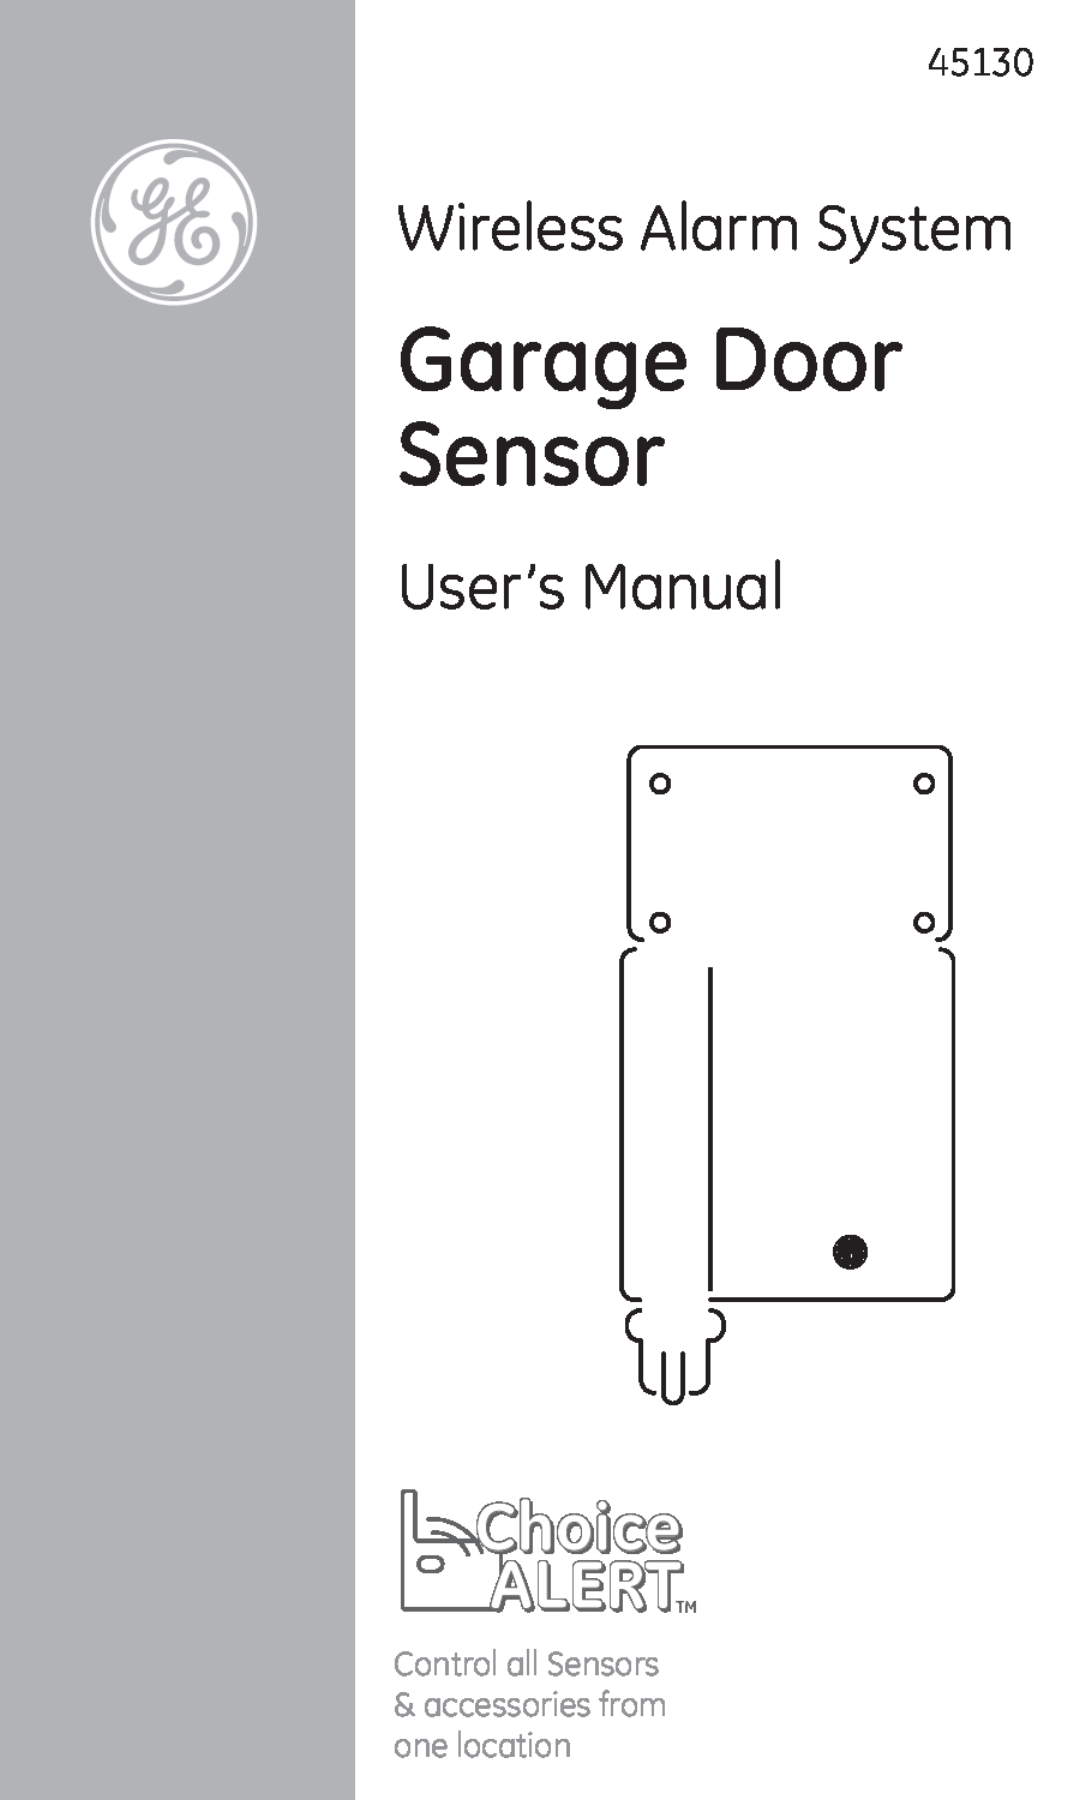 GE 45130 user manual Garage Door Sensor, Choice ALERT, Wireless Alarm System, Control all Sensors 